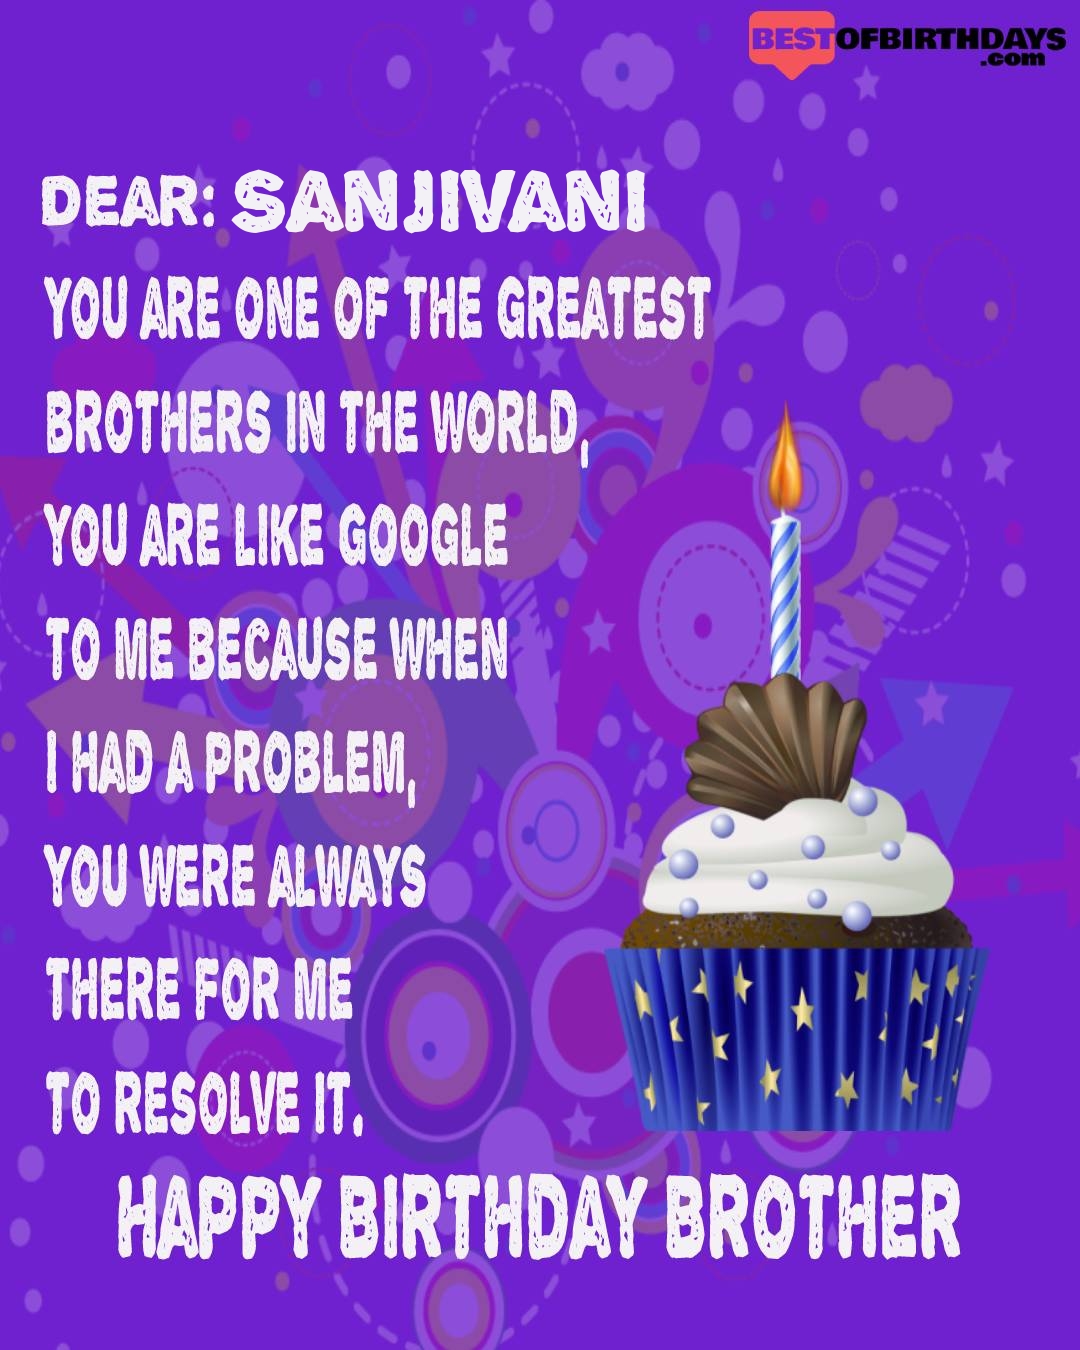 Happy birthday sanjivani bhai brother bro